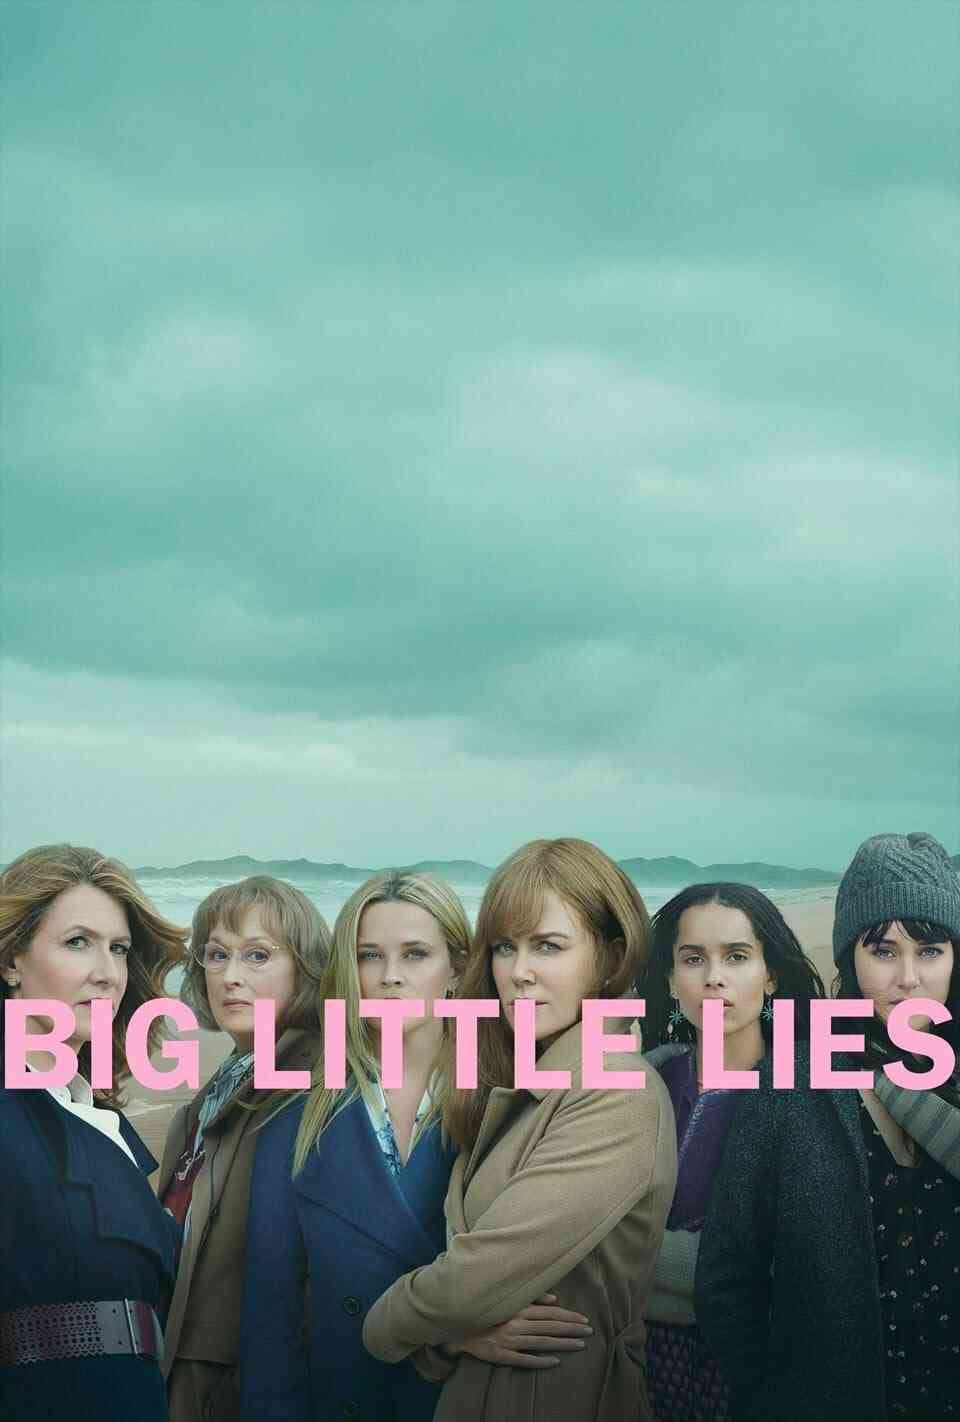 Read Big Little Lies screenplay (poster)